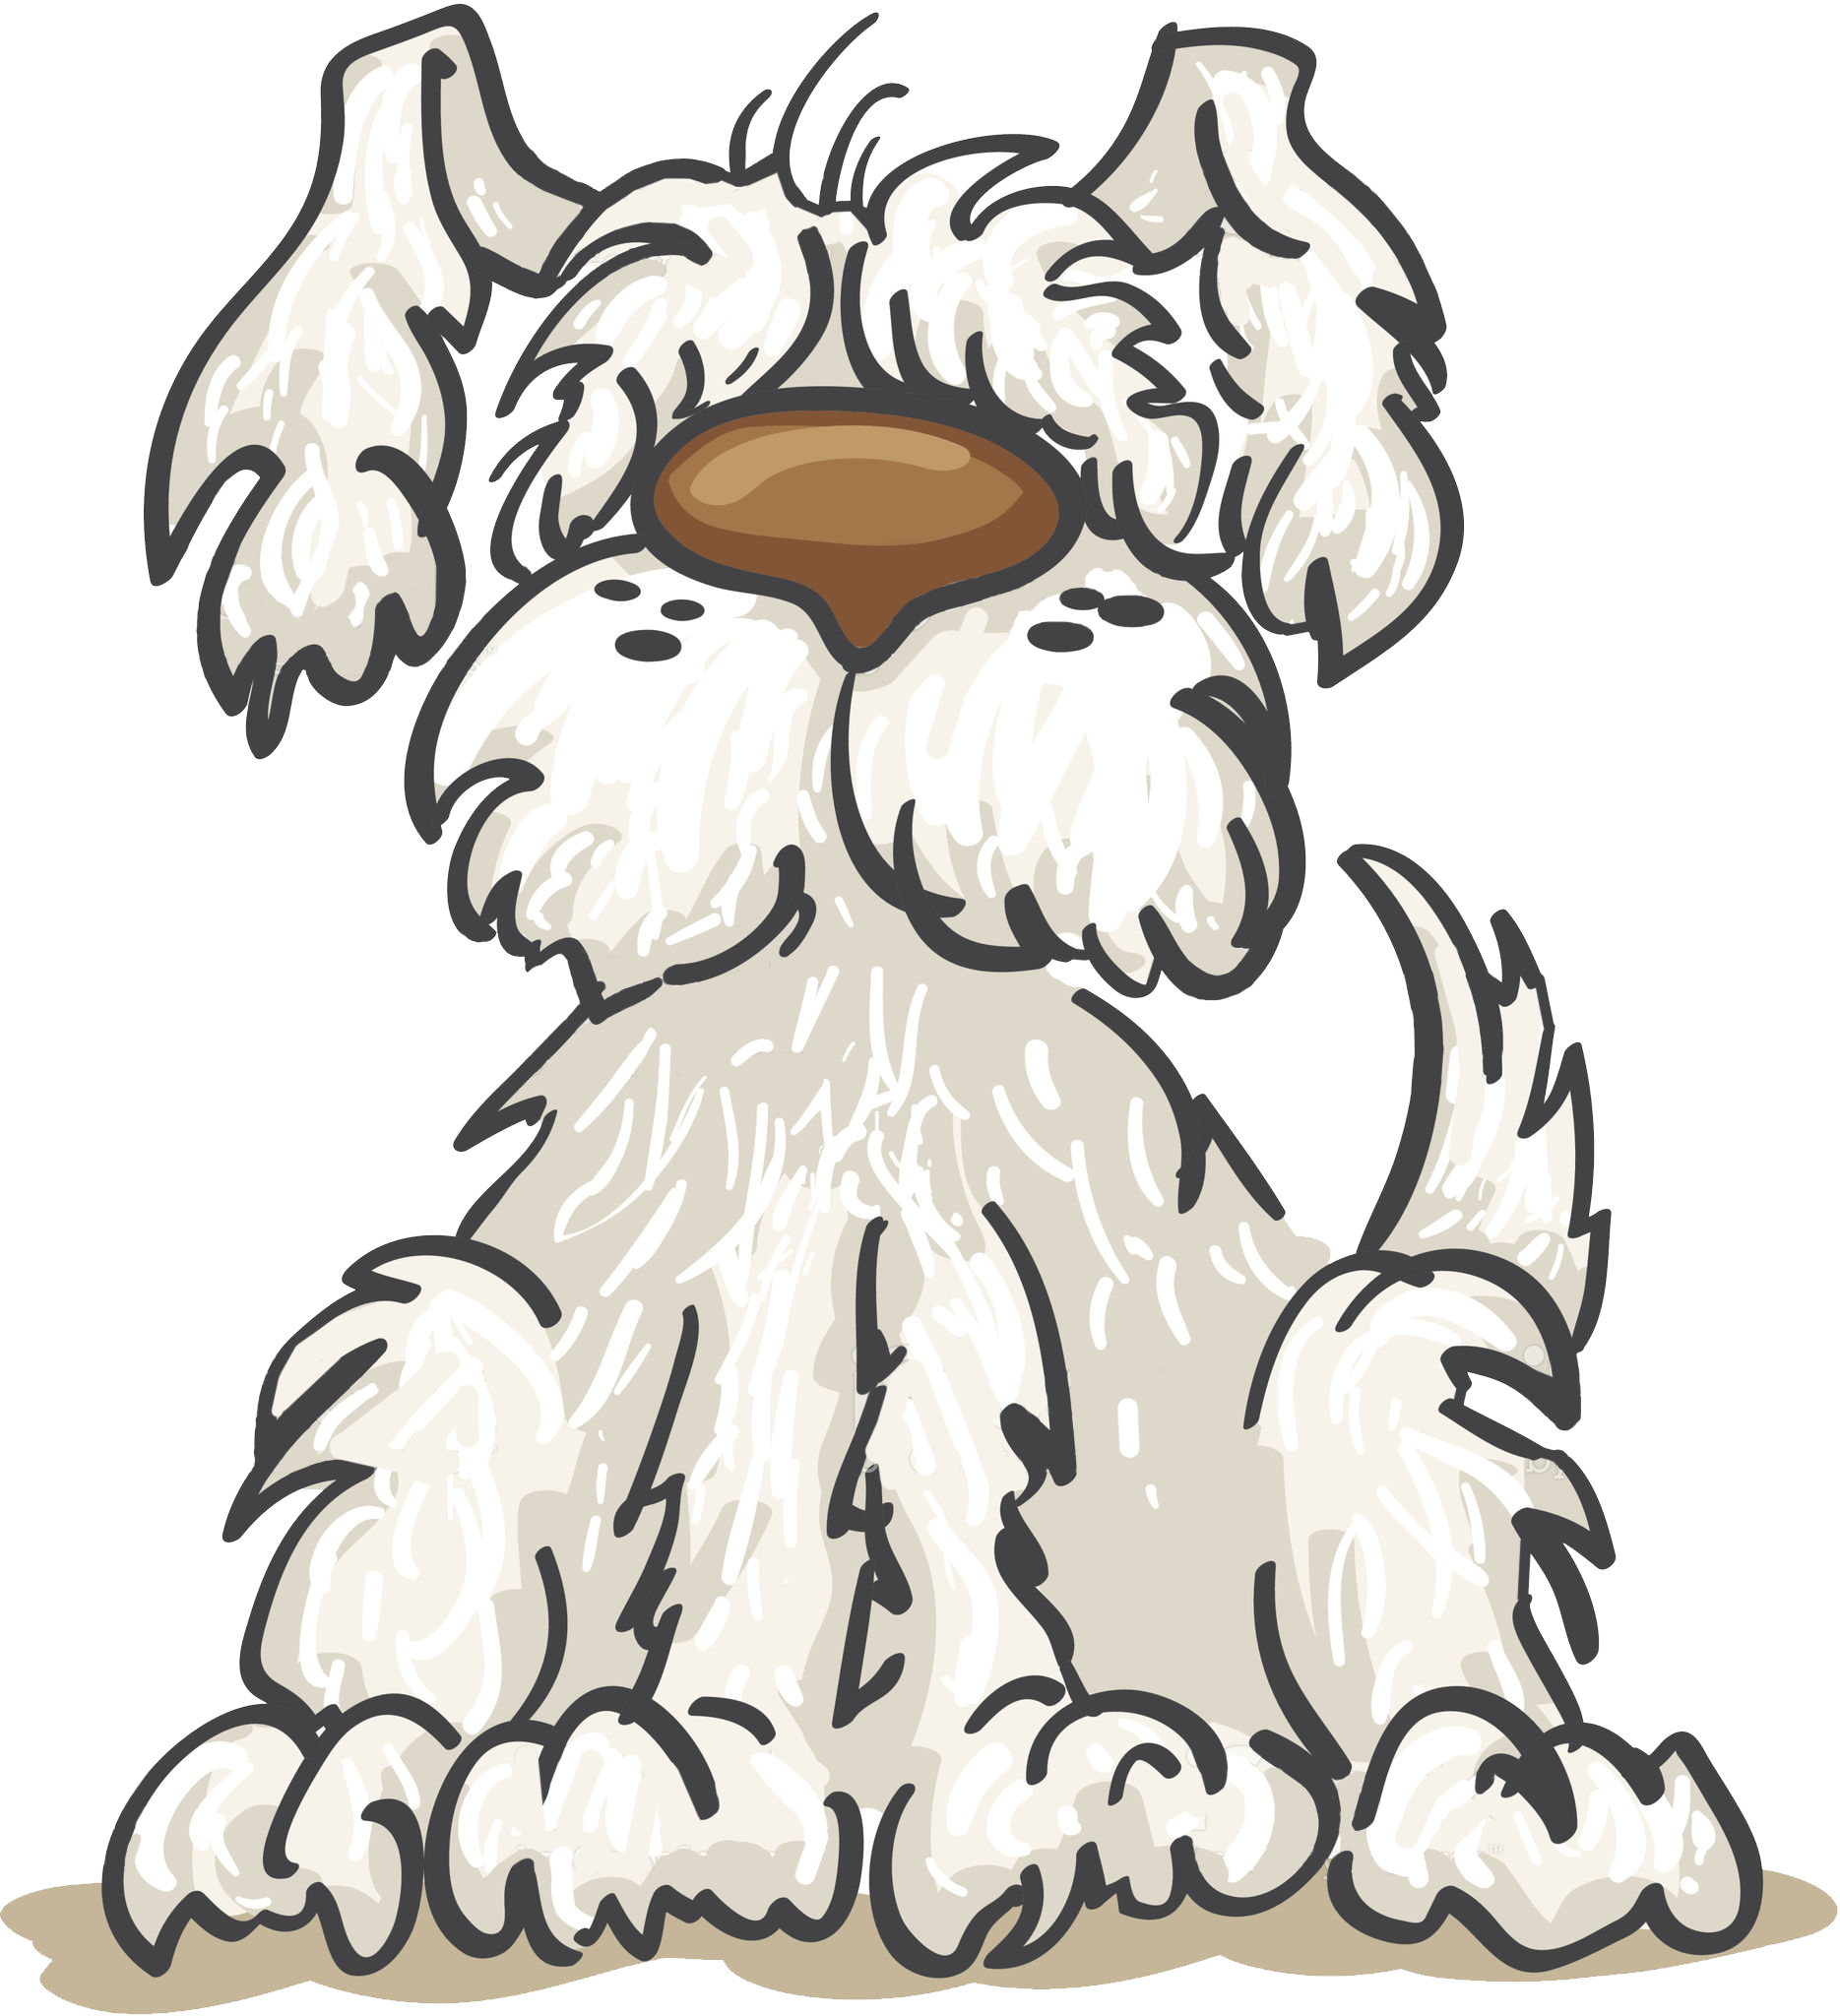 Experienced Professional Dog Walker - Clip Art Shaggy Dog (1869x2048)